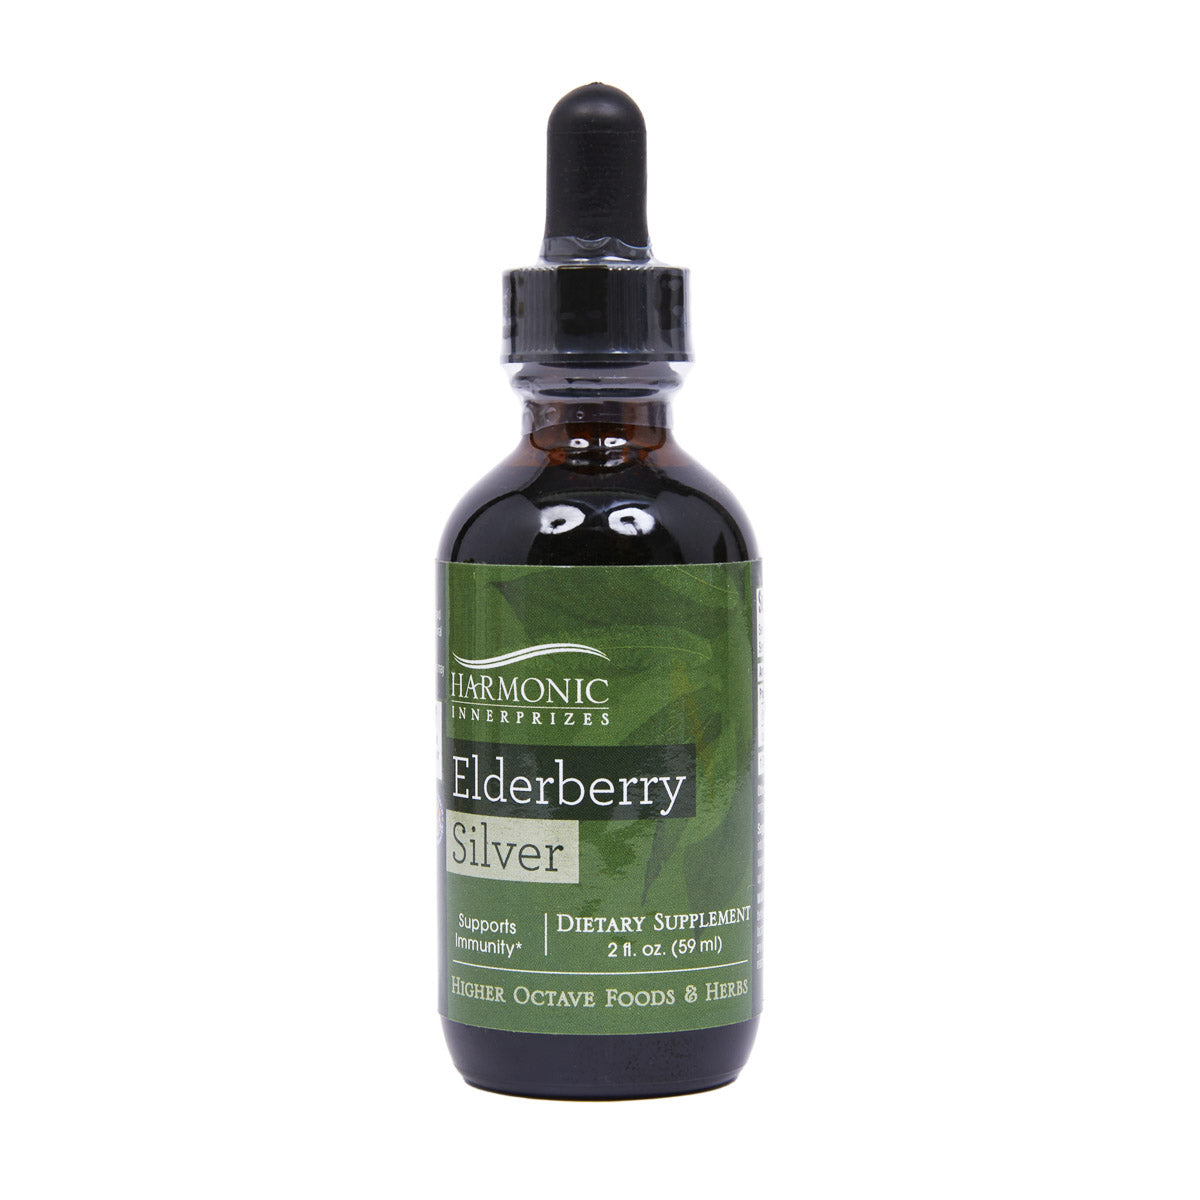 Elderberry Silver (1oz) - Harmonic Innerprizes